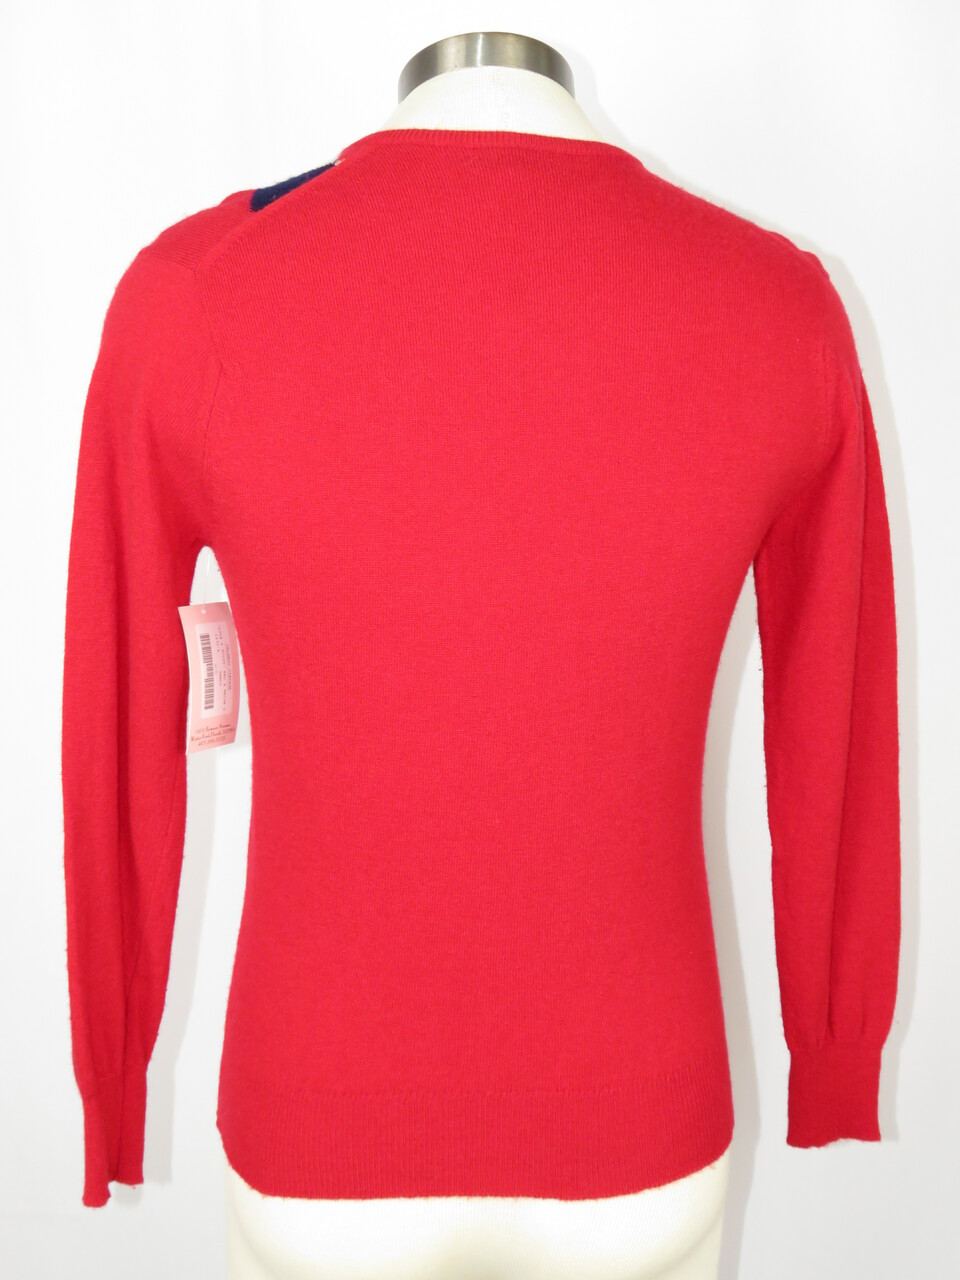 Lyle & Scott Red, White, & Black Argyle Sweater - Orlando Vintage